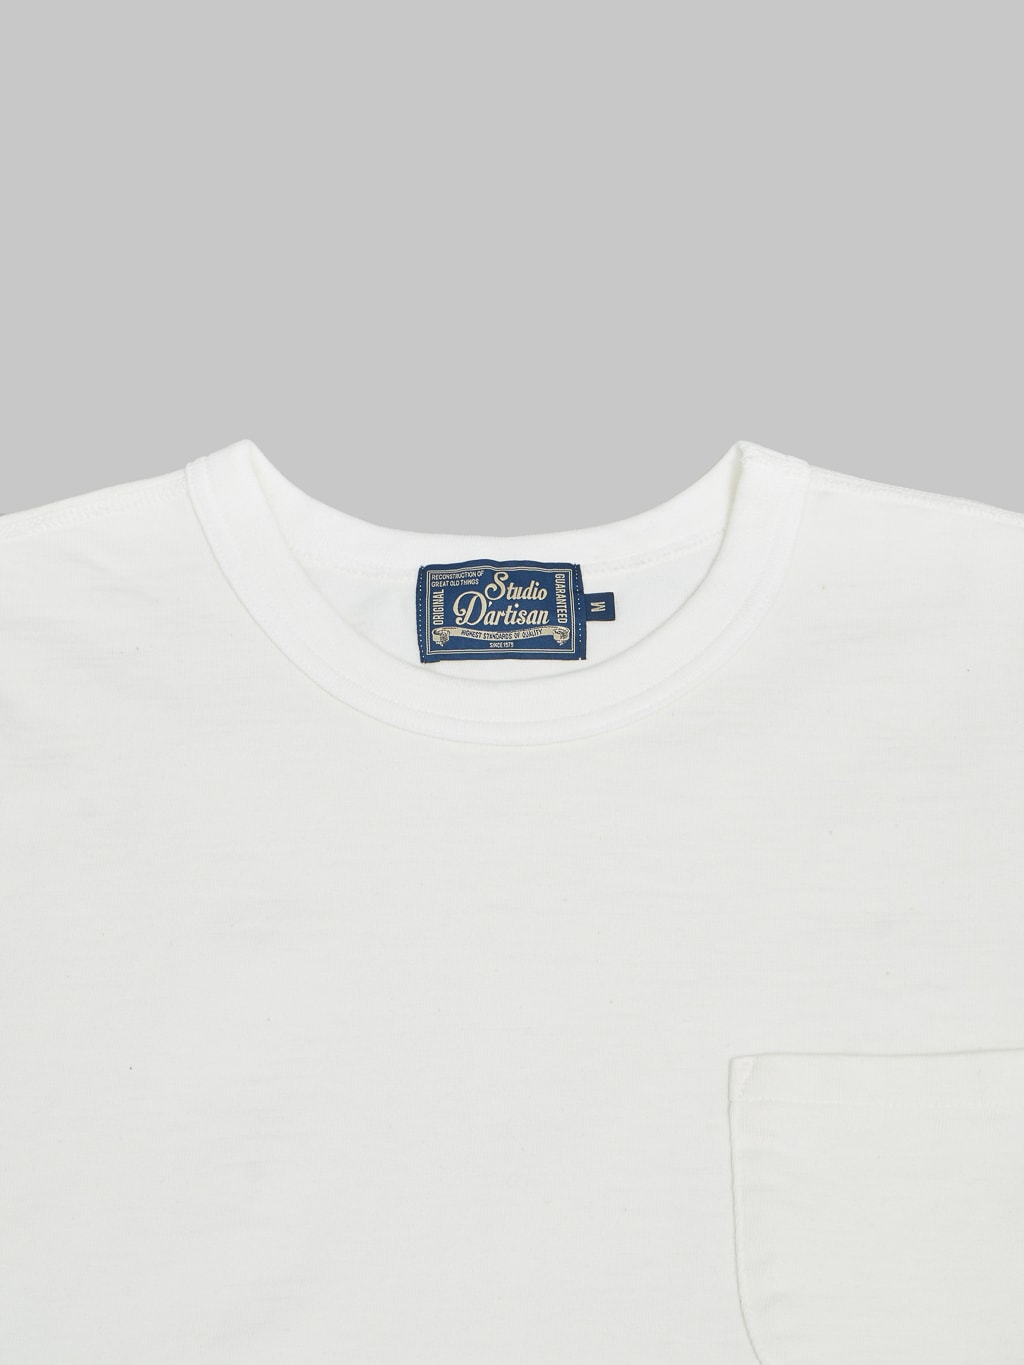 Studio DArtisan Suvin Gold Loopwheeled Tshirt white collar